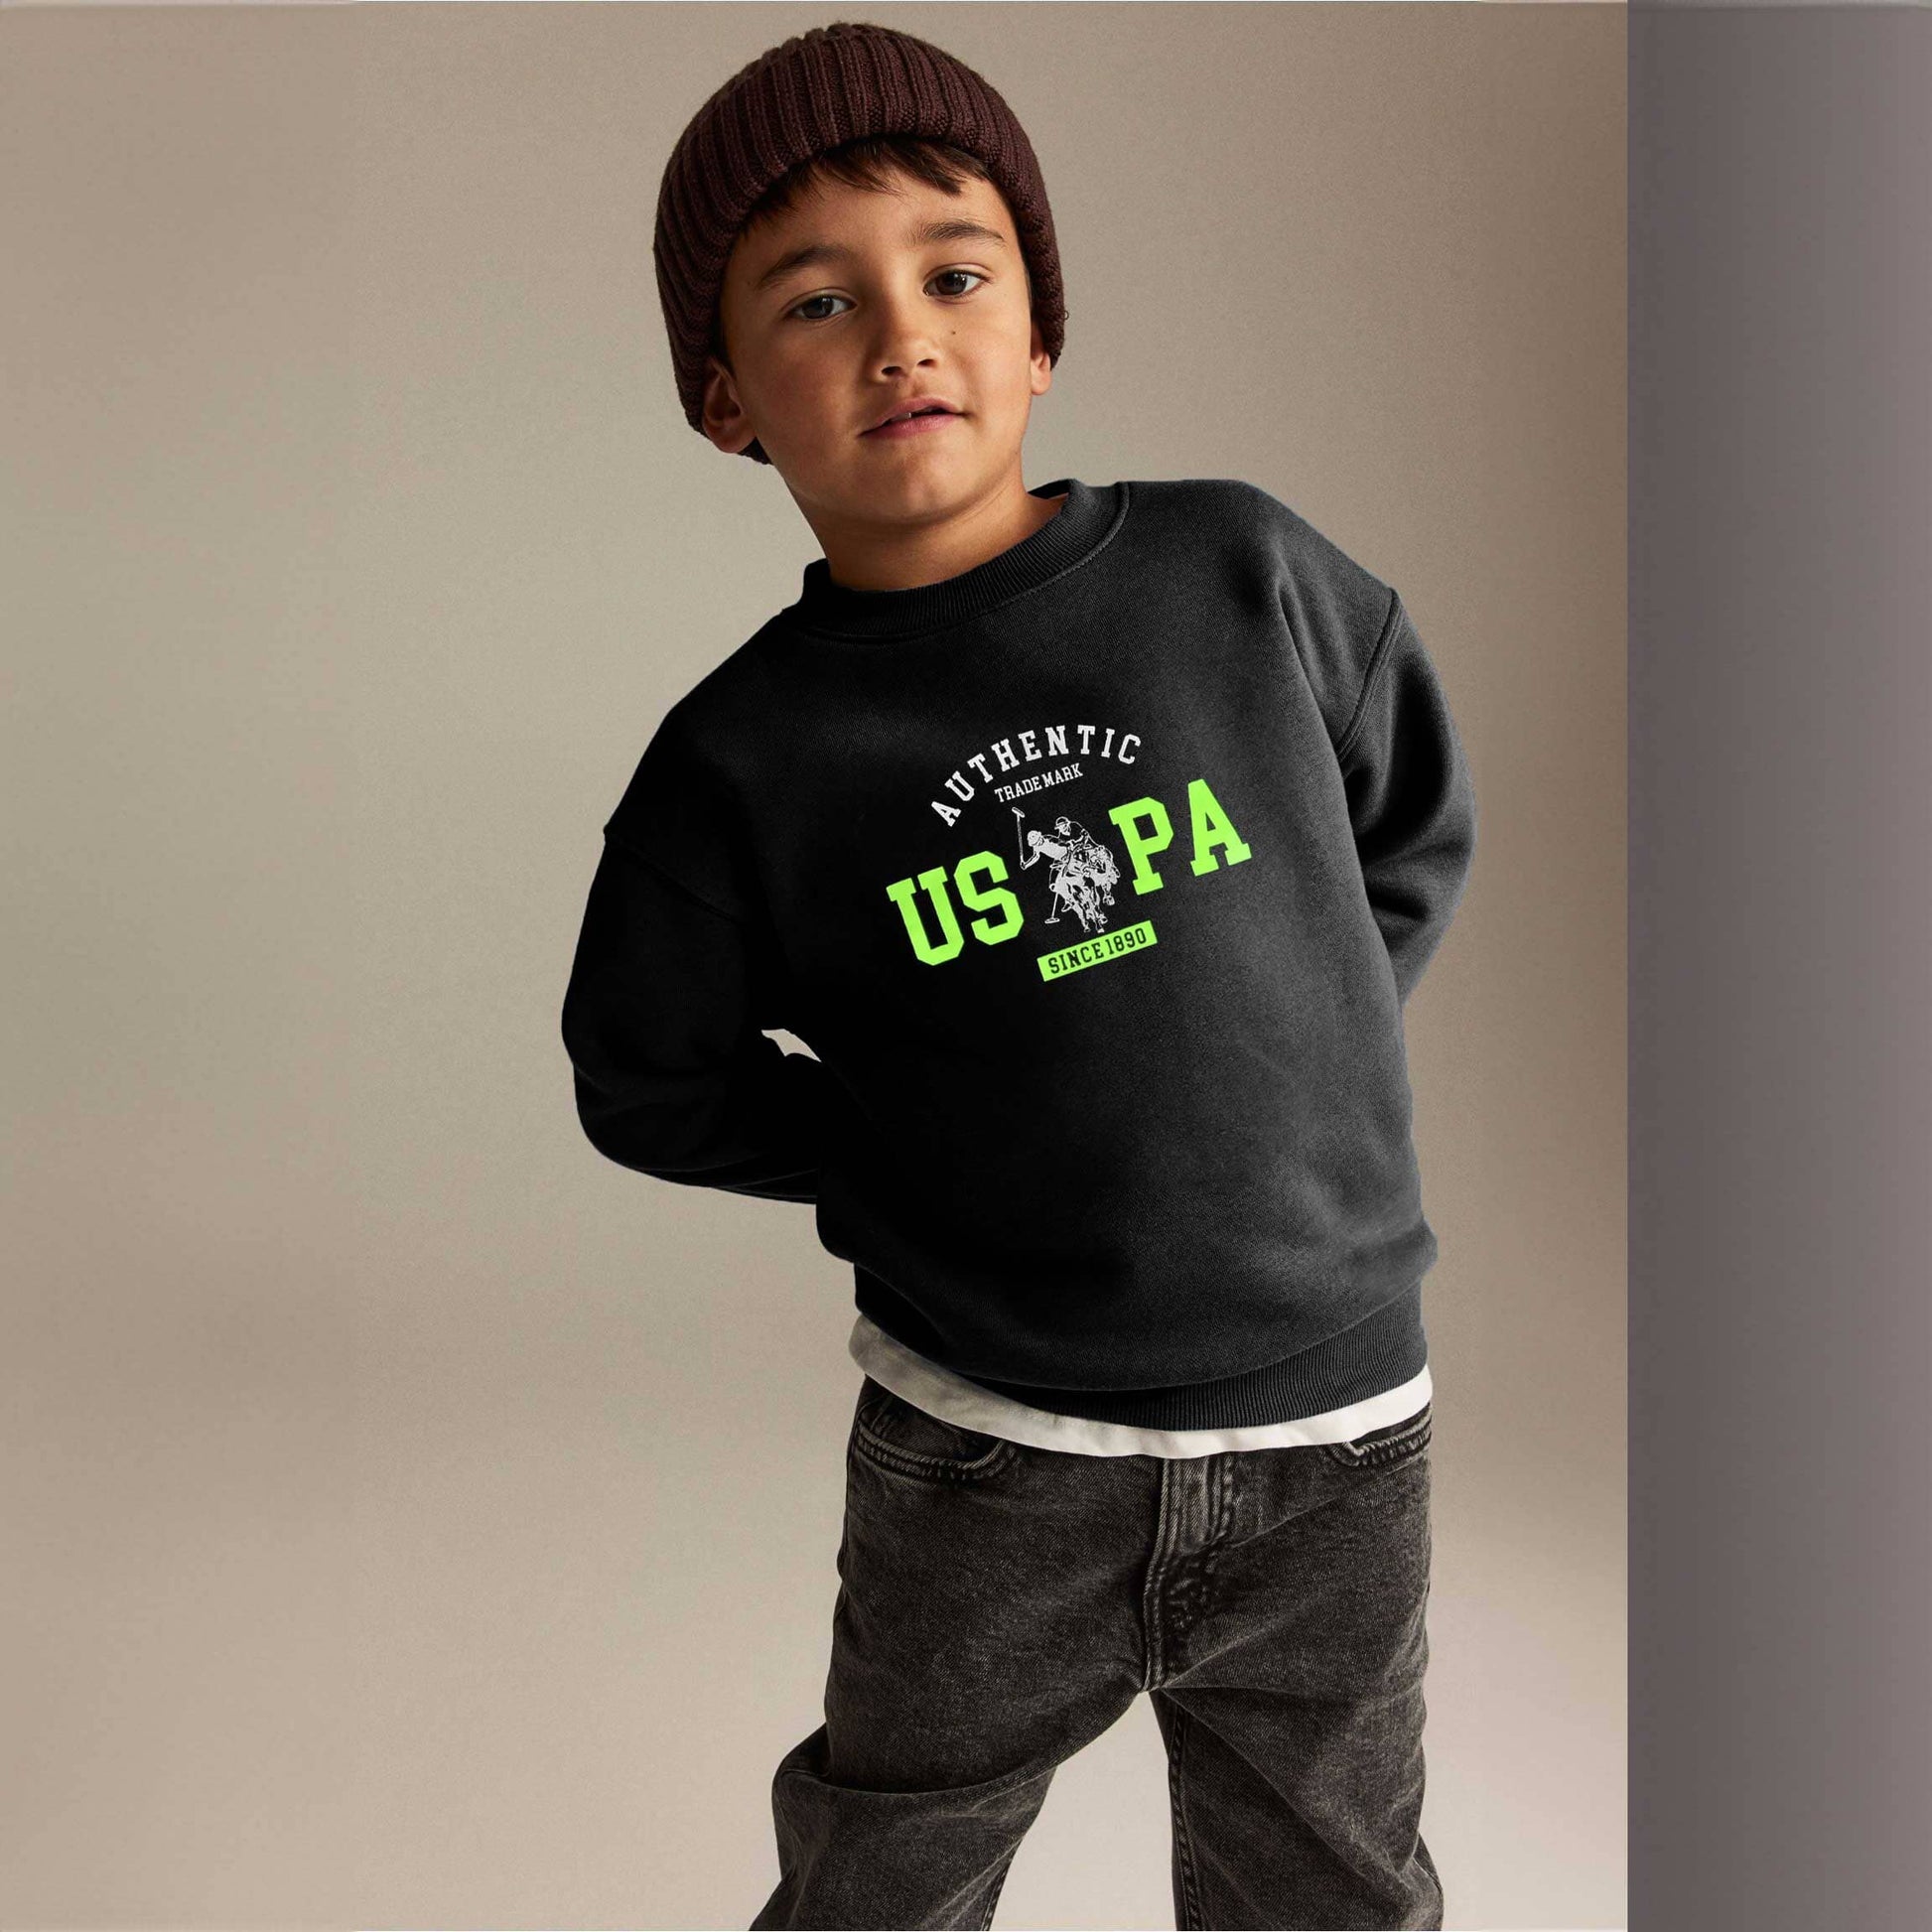 USPA Kid's Authentic US Printed Fleece Sweat Shirt Kid's Sweat Shirt Fiza Black (XS) 2-3 Years 